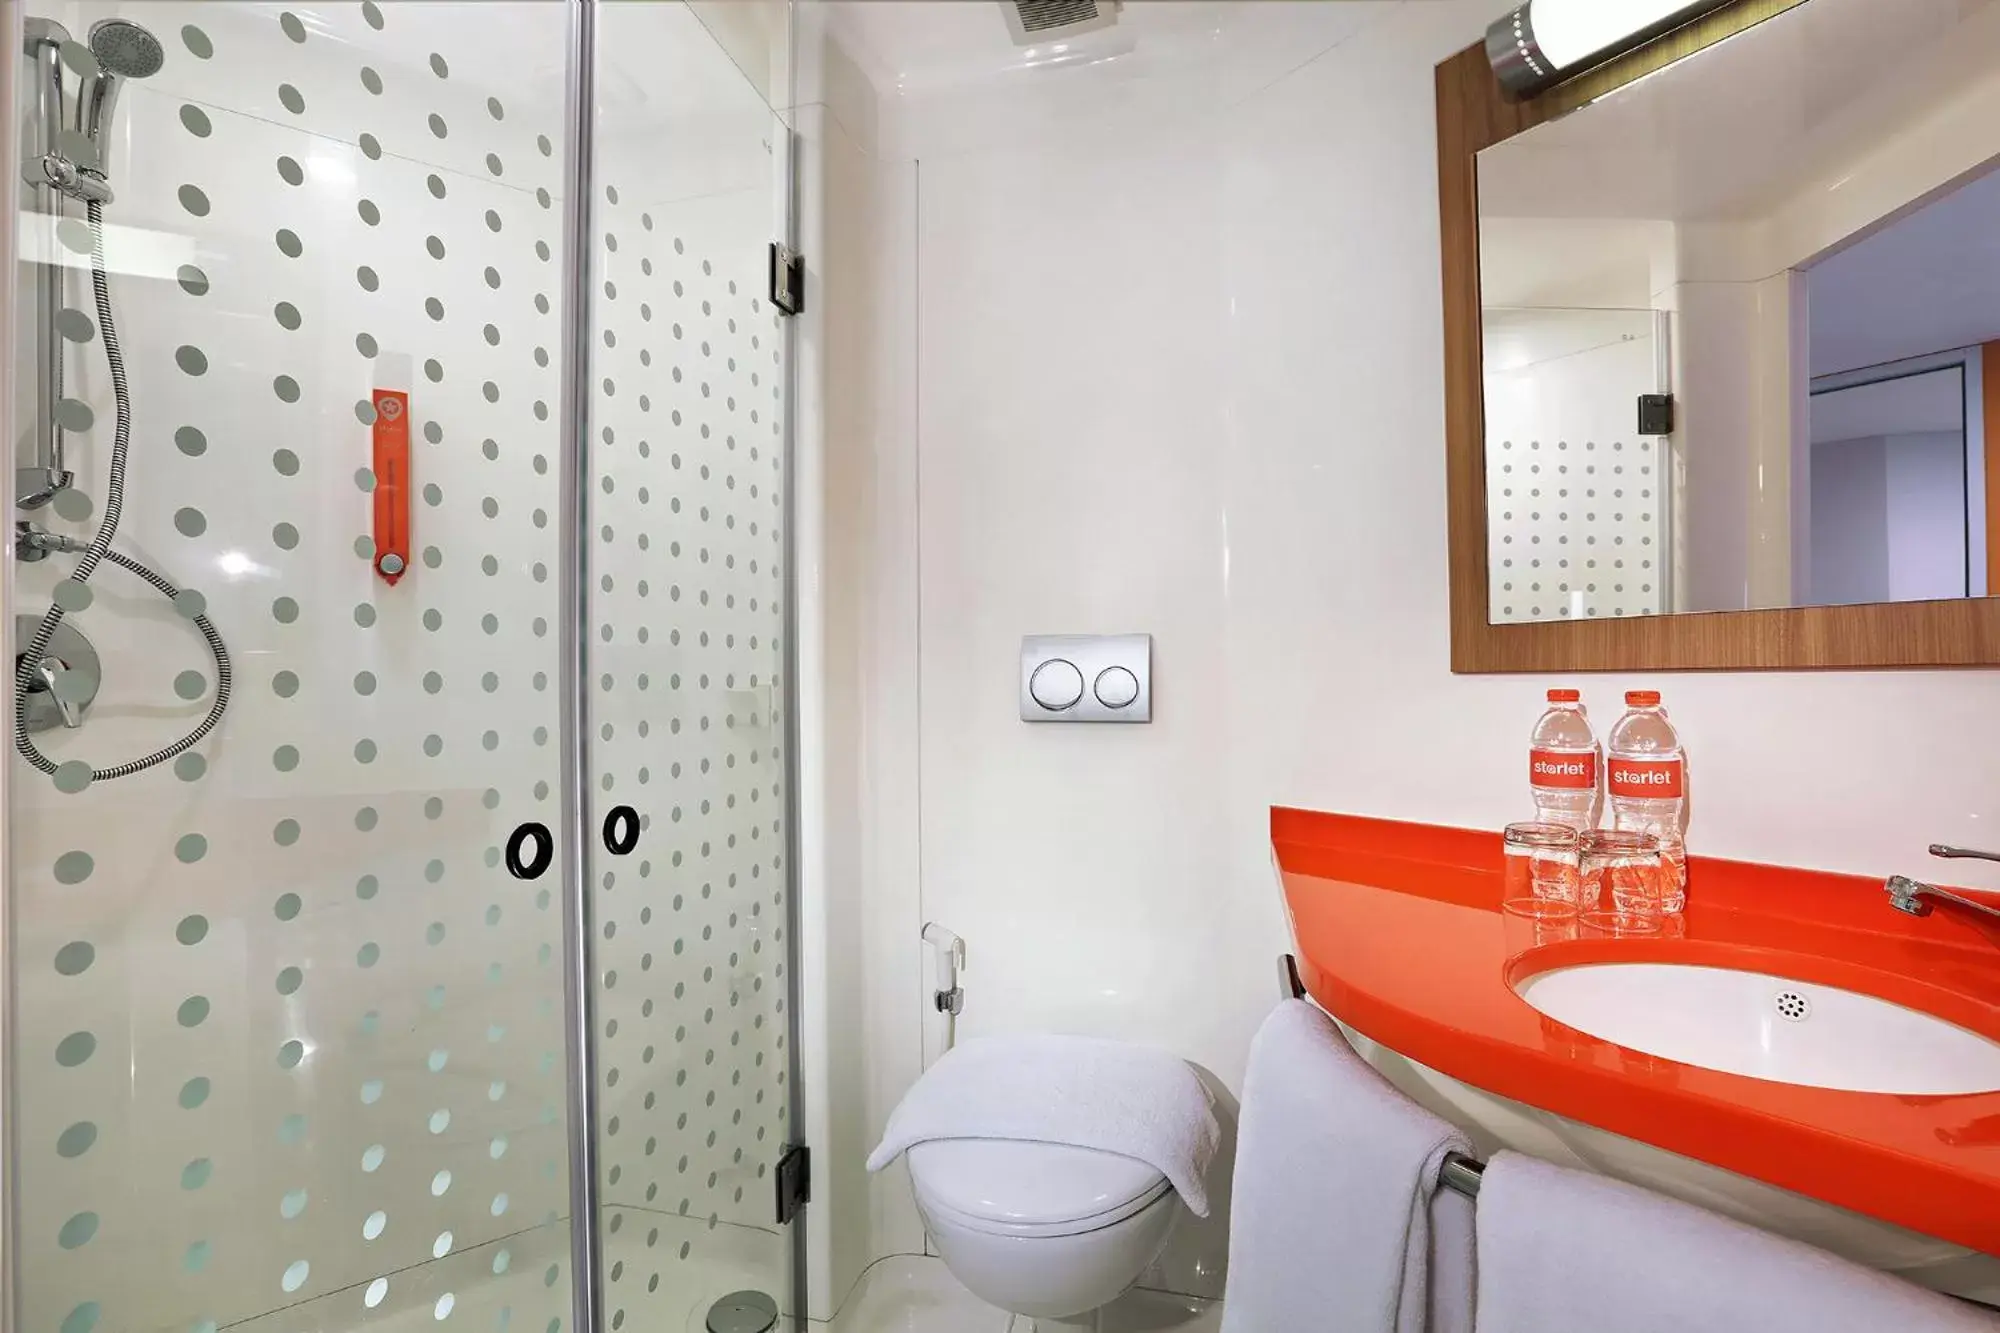 Shower, Bathroom in Starlet Hotel Serpong